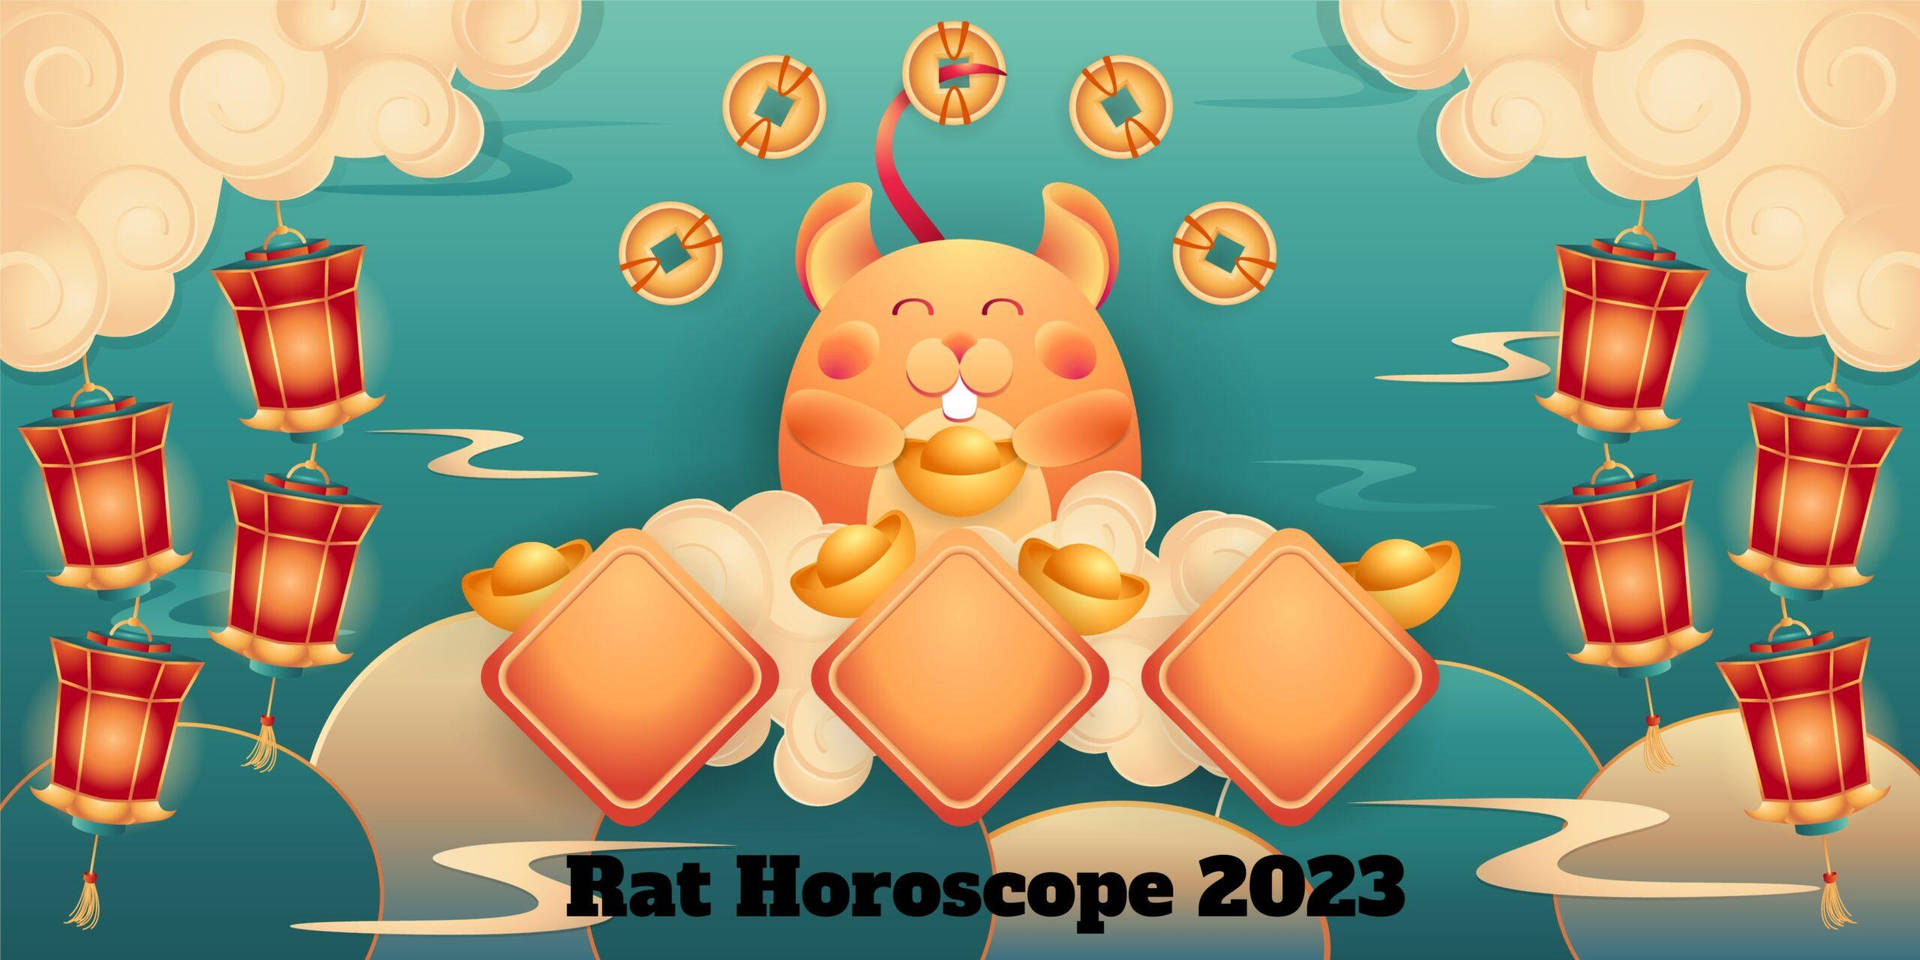 Råttanhoroskopet 2023. Wallpaper